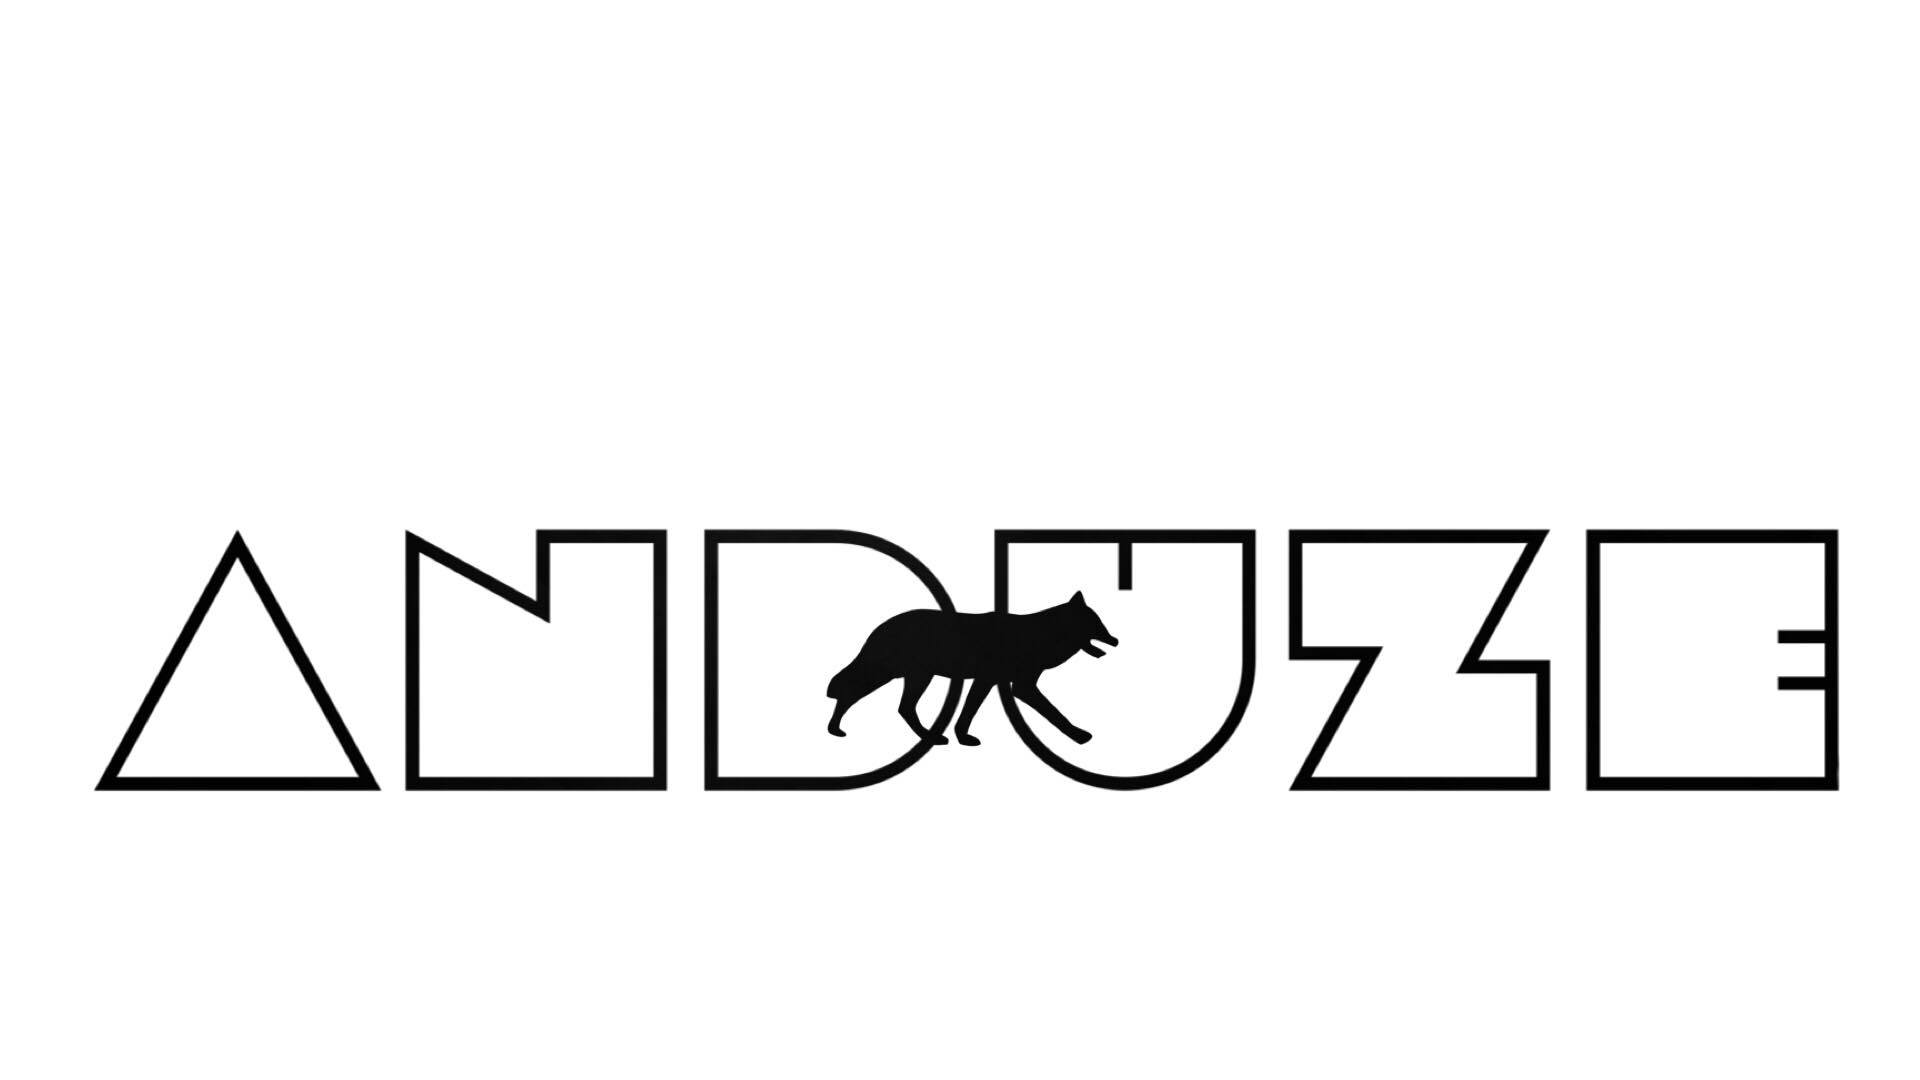 anduze logo